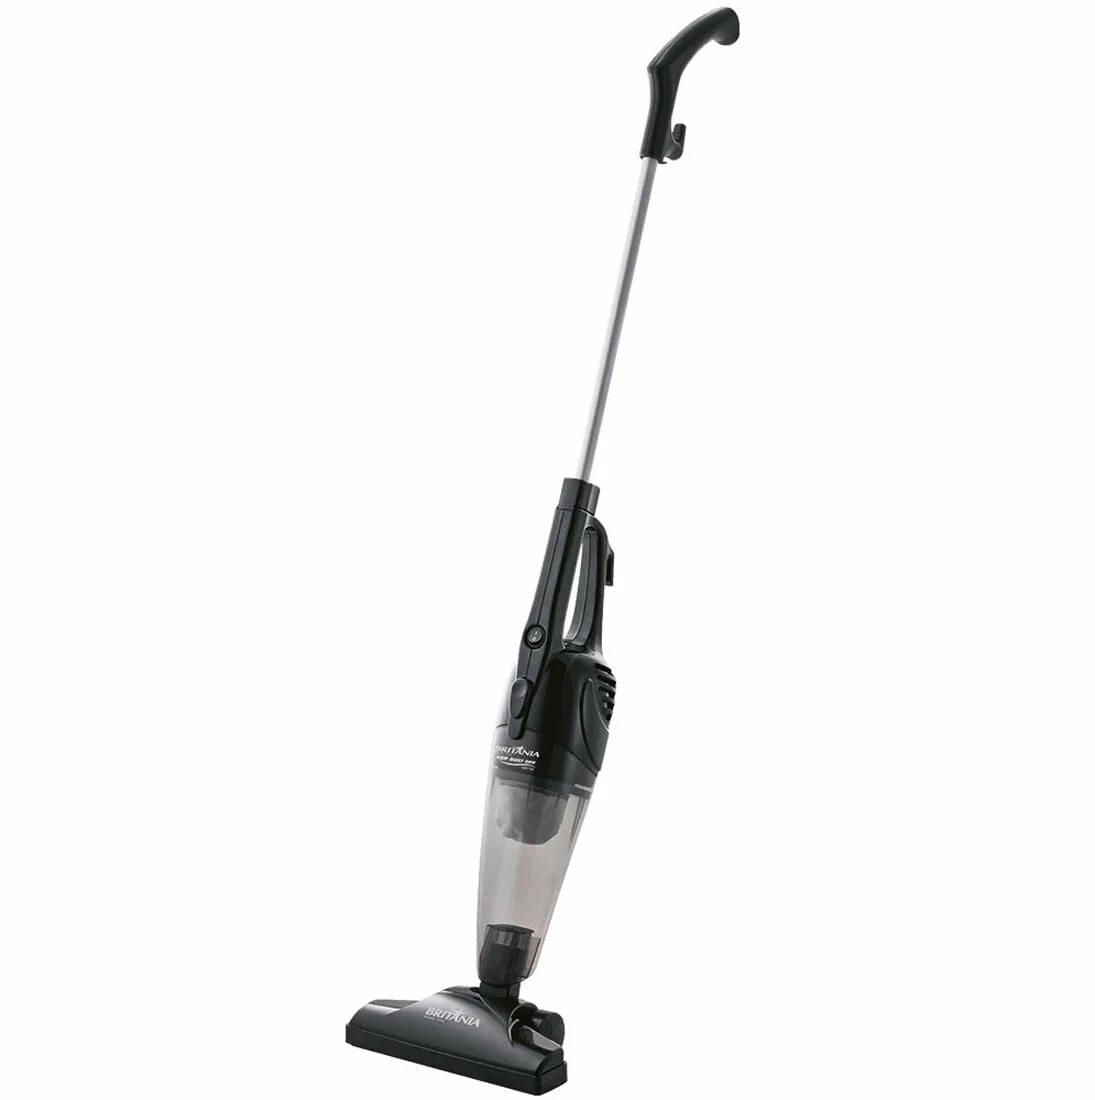 Stick vacuum cleaner. Bagless Vacuum Cleaner v-c7270h. Karcher пылесос палка. Пылесос на палке электрический. Пылесос дуос ручной.